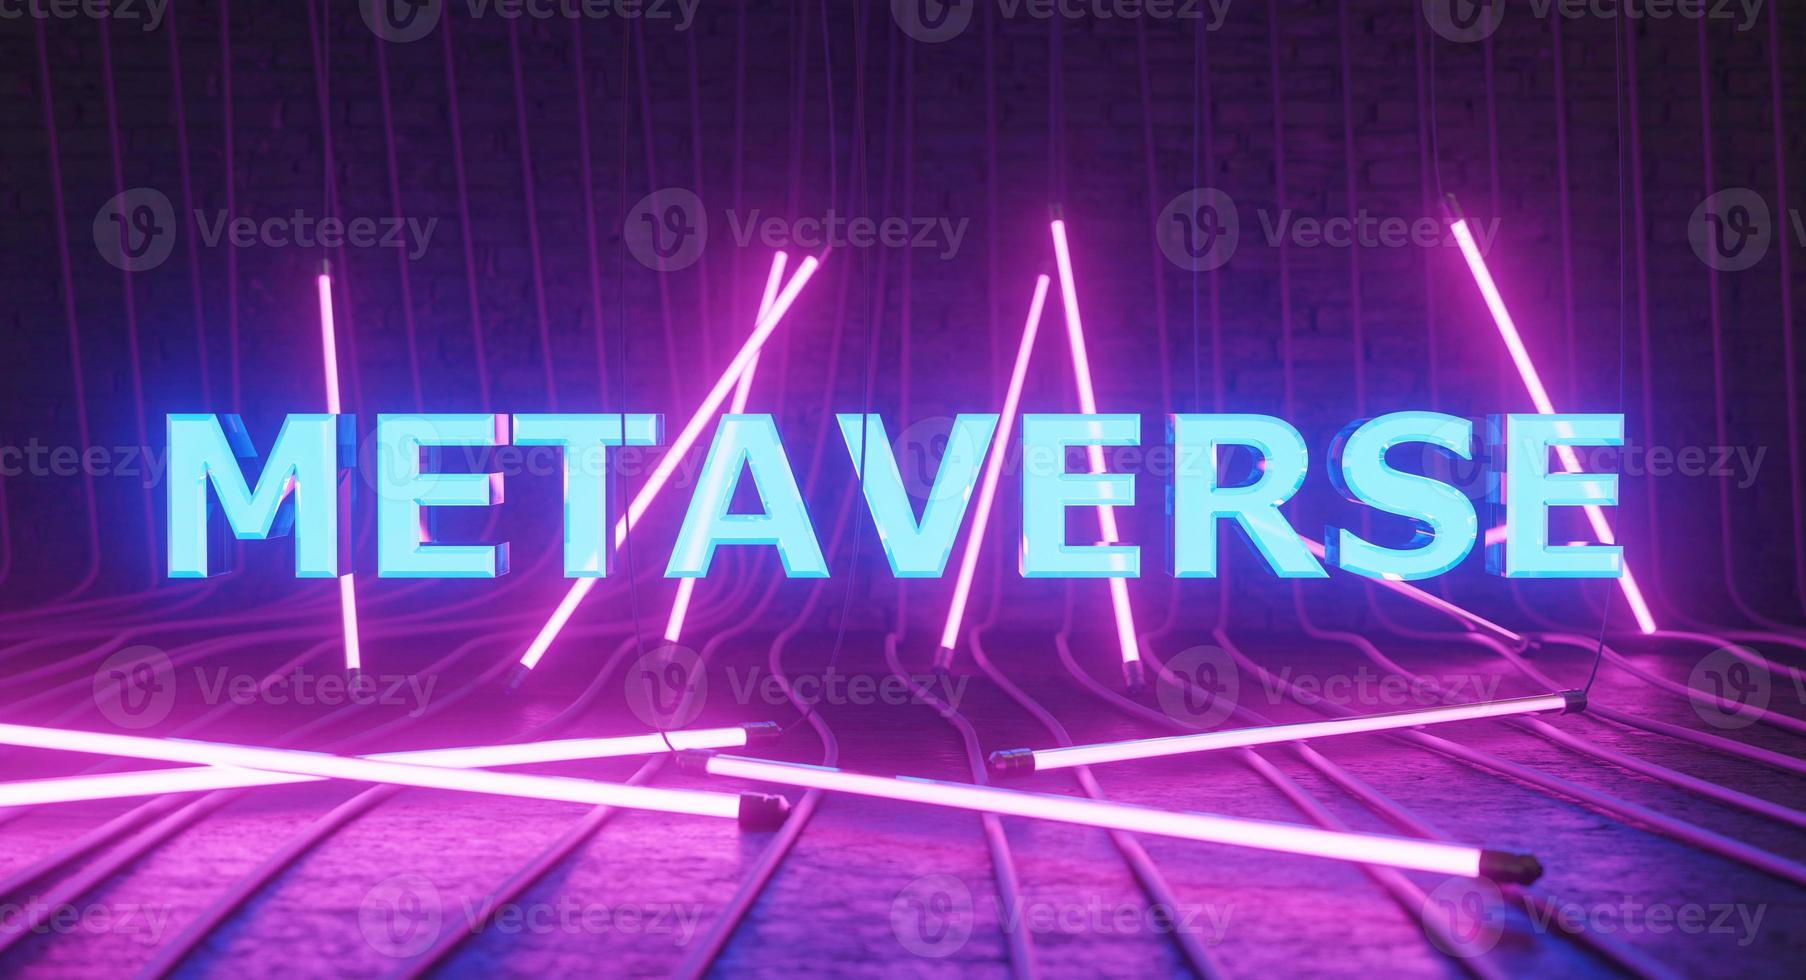 METAVERSE light sign with neon bars around photo